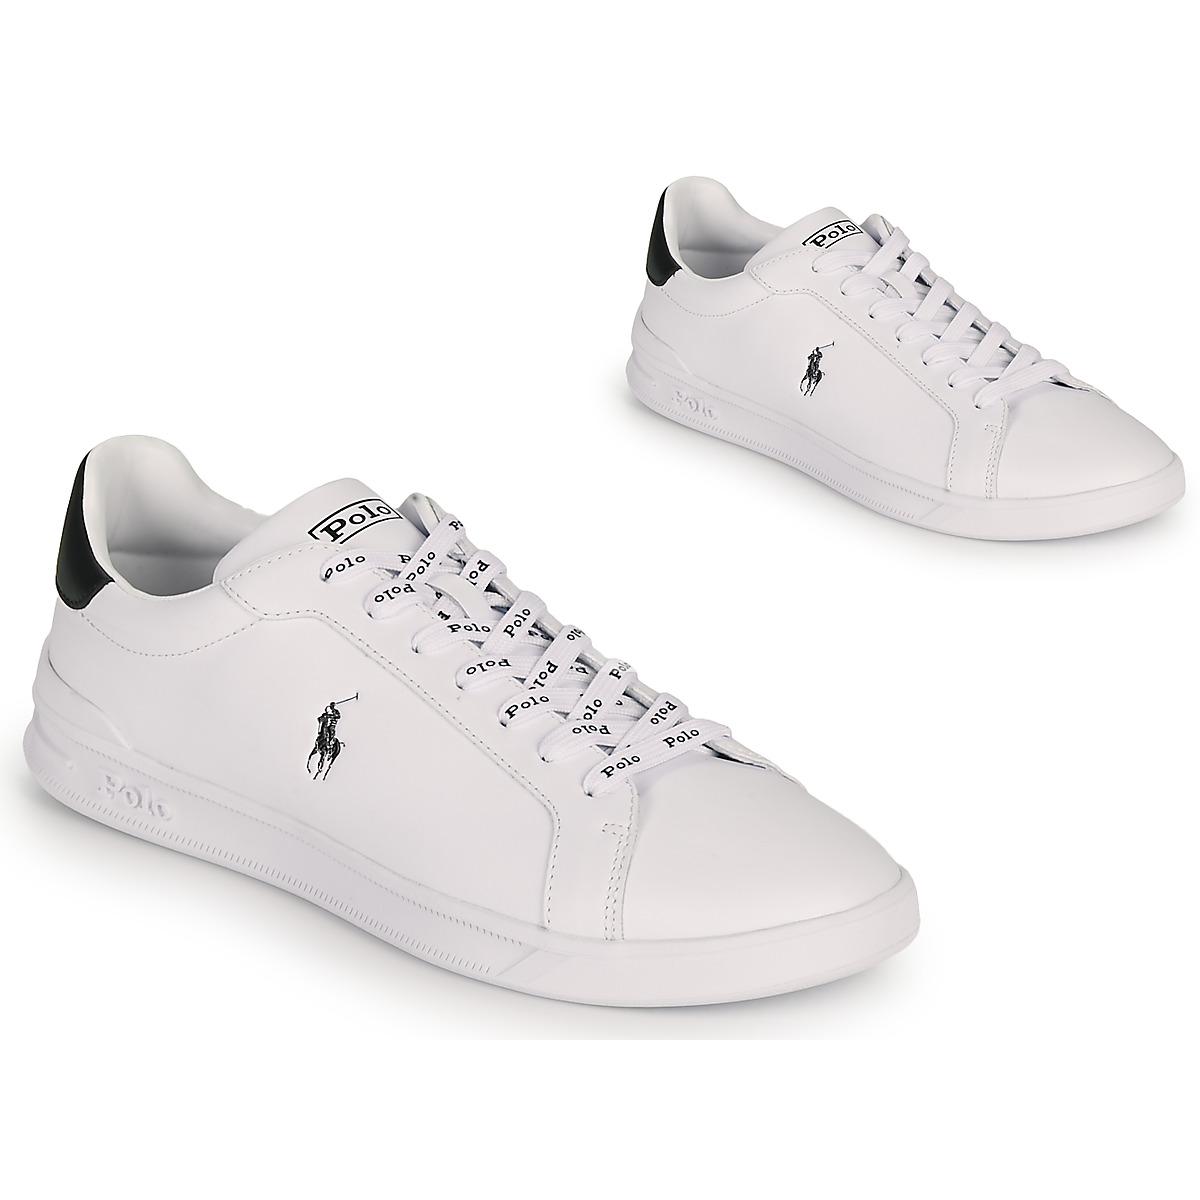 Polo Ralph Lauren HRT ct II-SNEAKERS-ATHLETIC Shoe Shoes (Trainers) (Men)